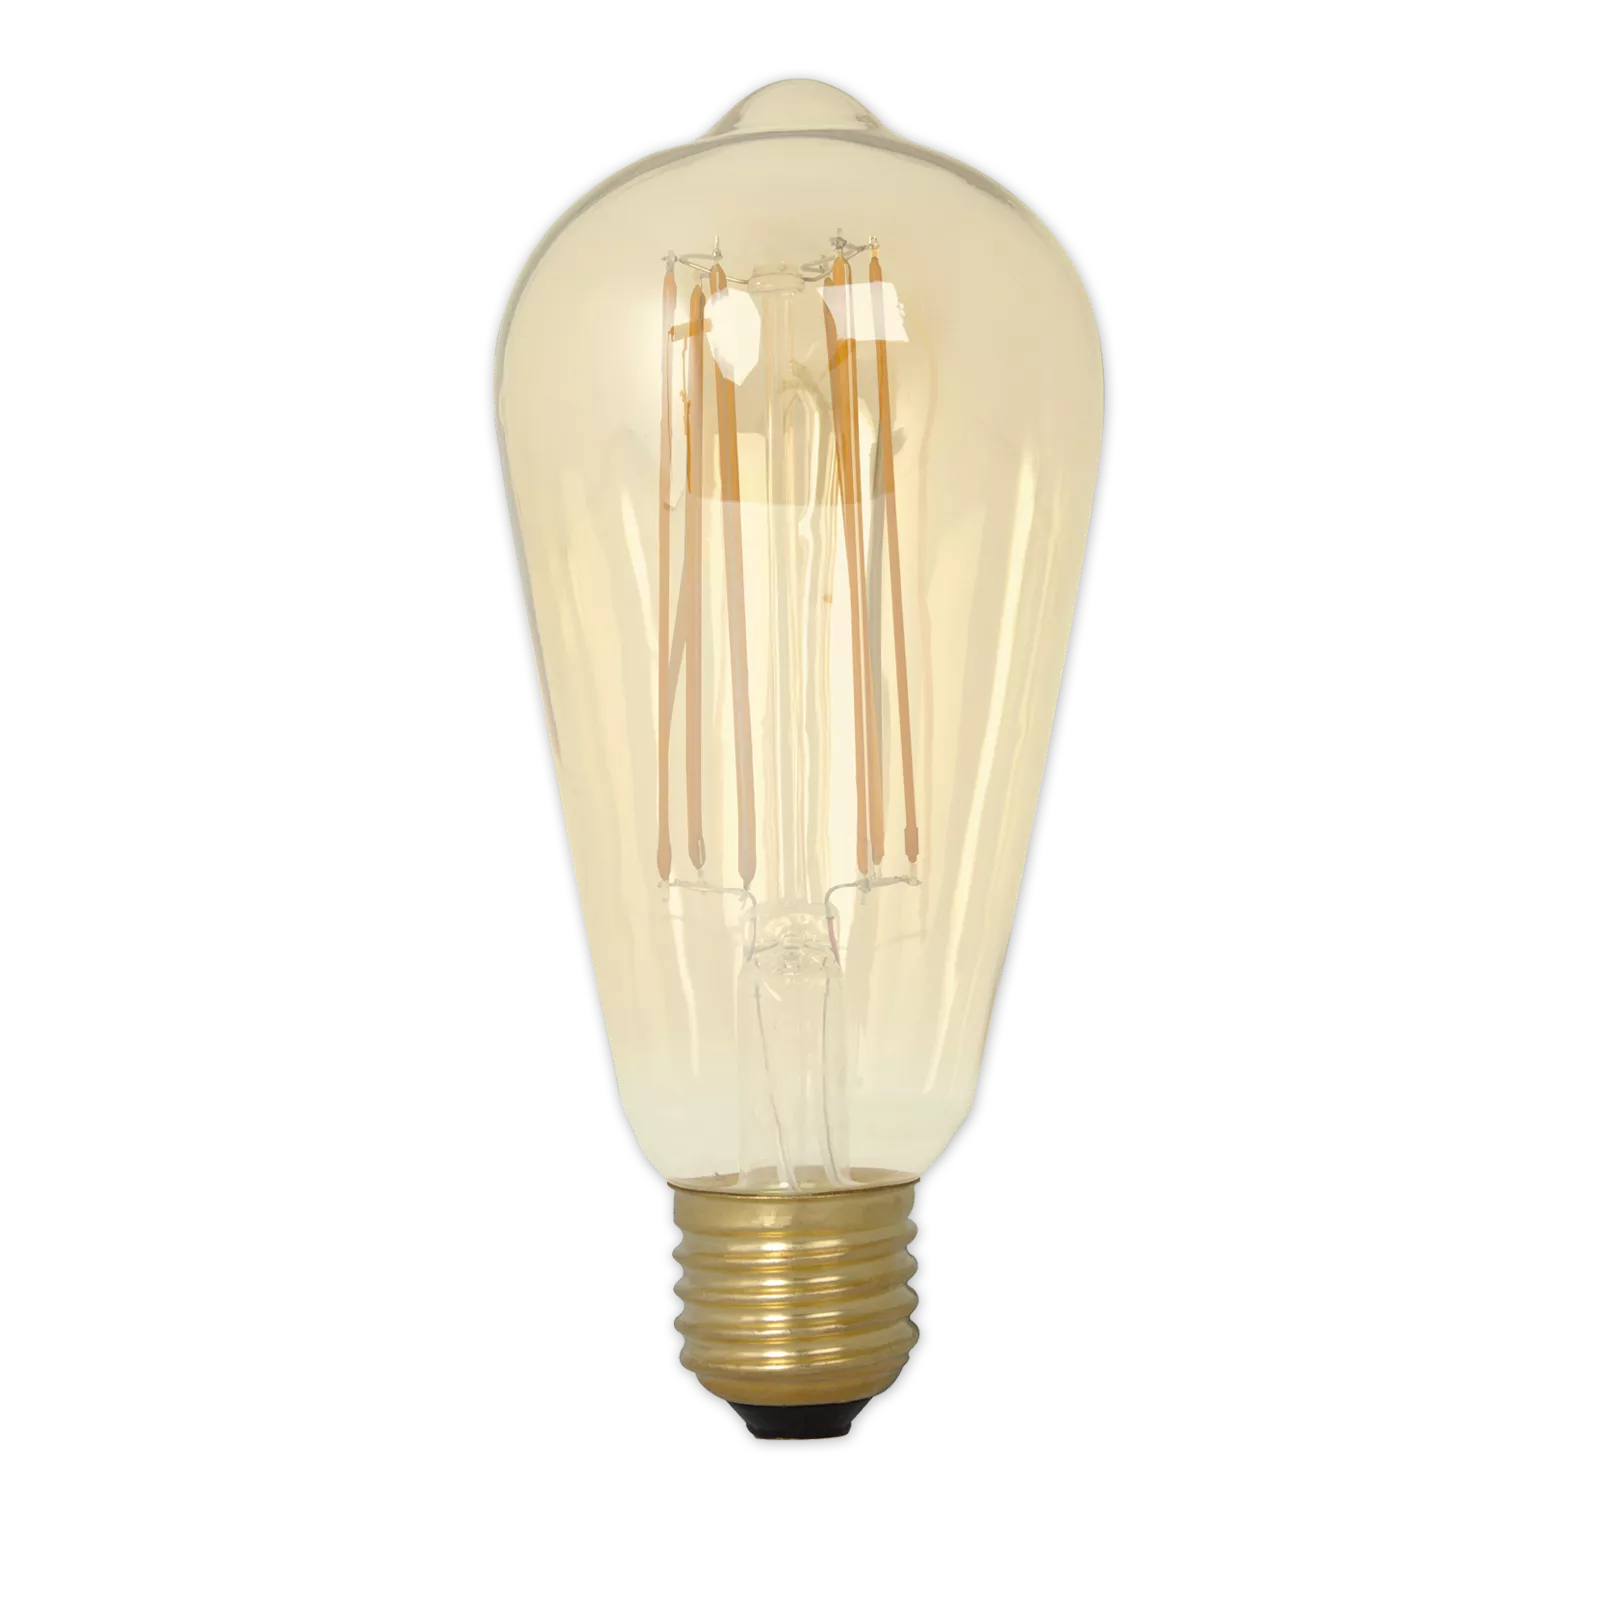 LED lamp Rustic - Gold